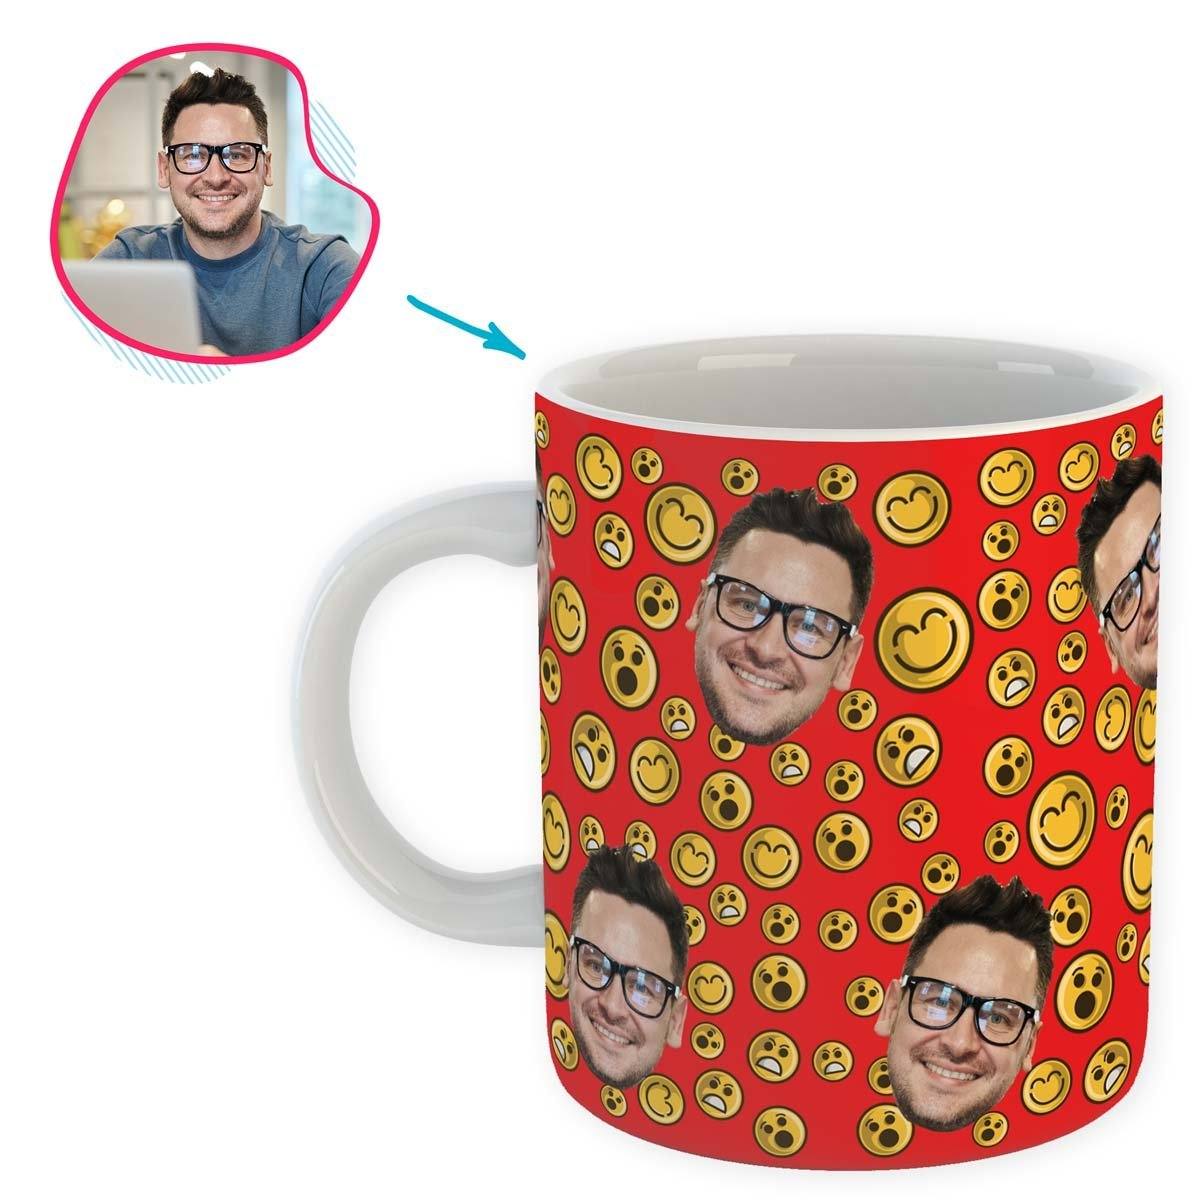 Smiles Personalized Mug